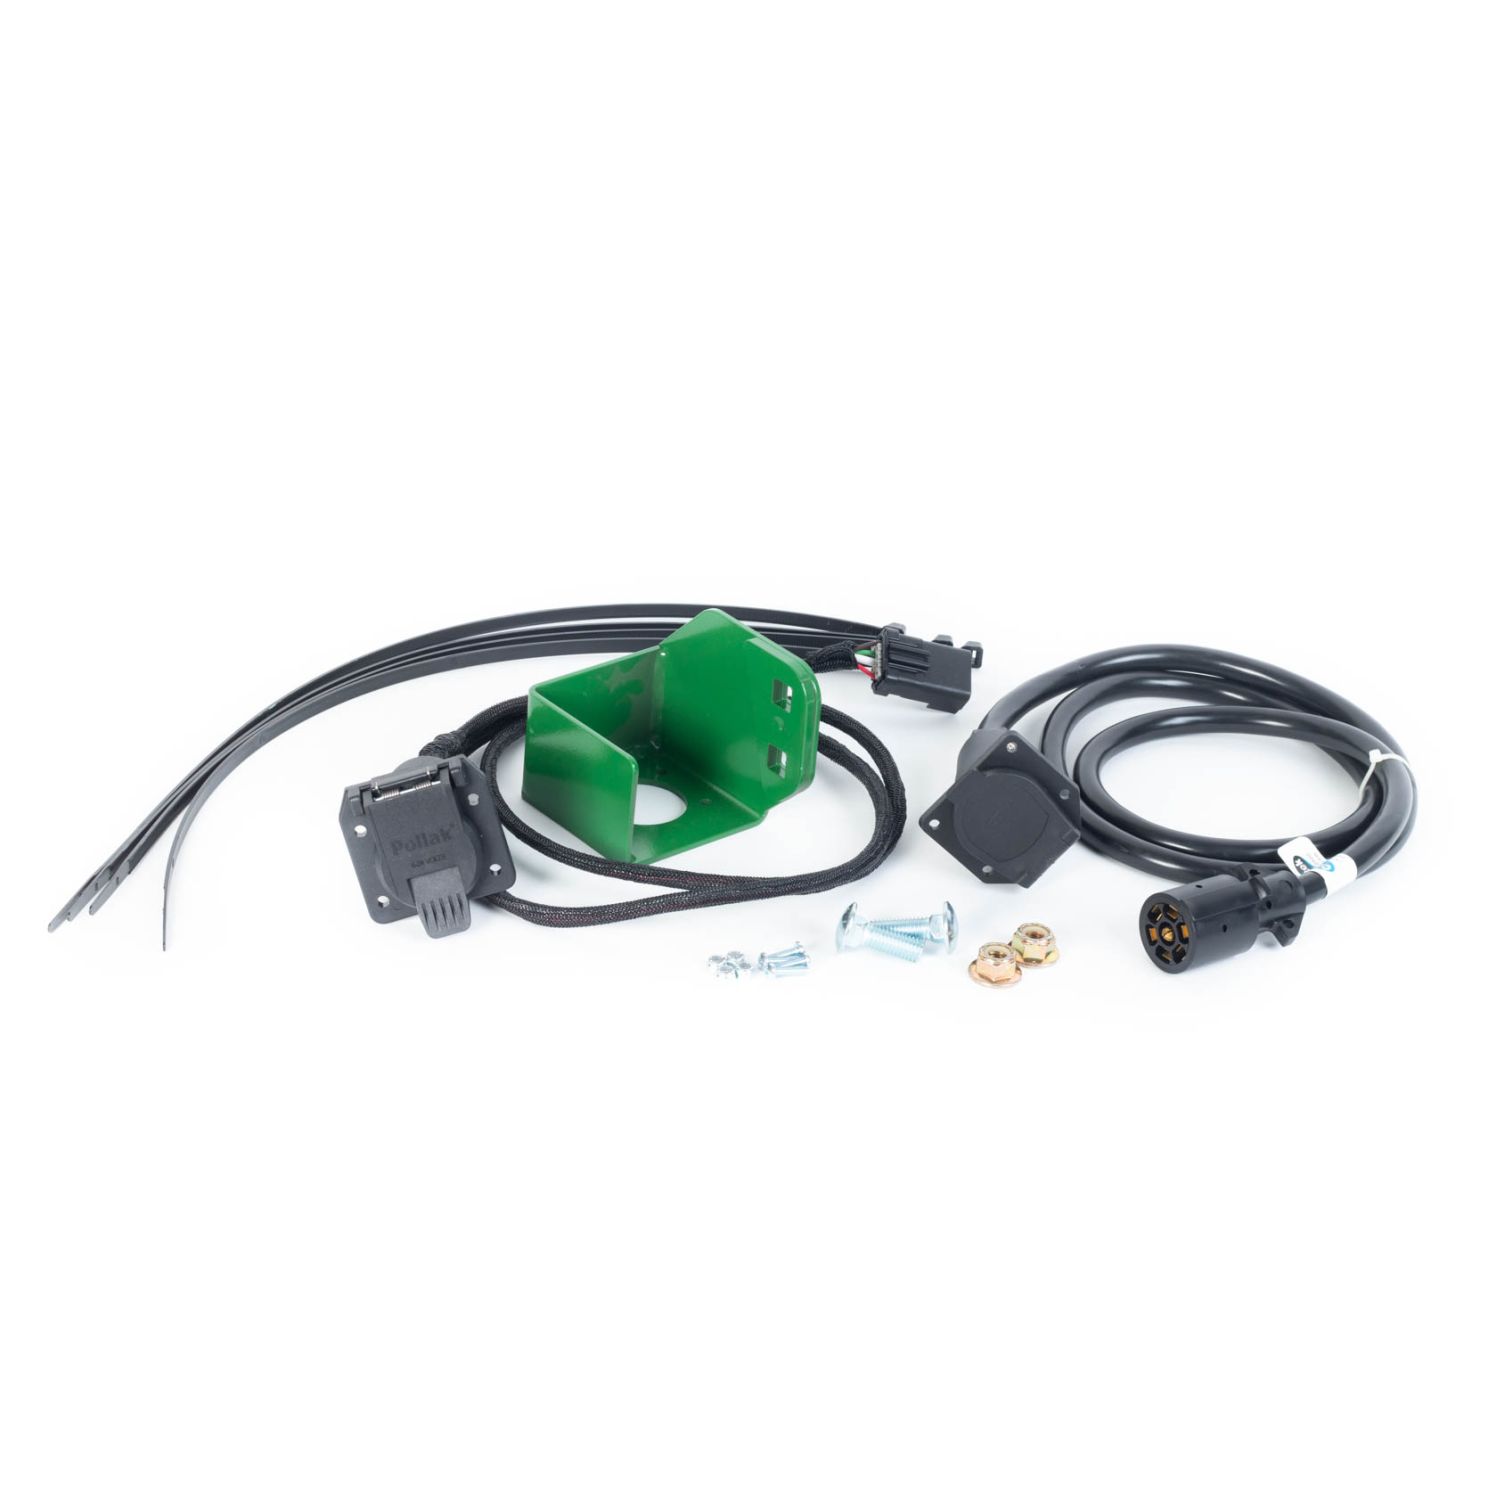 Lankota Trailer Wiring Harness Kit for John Deere X9 Series Combines